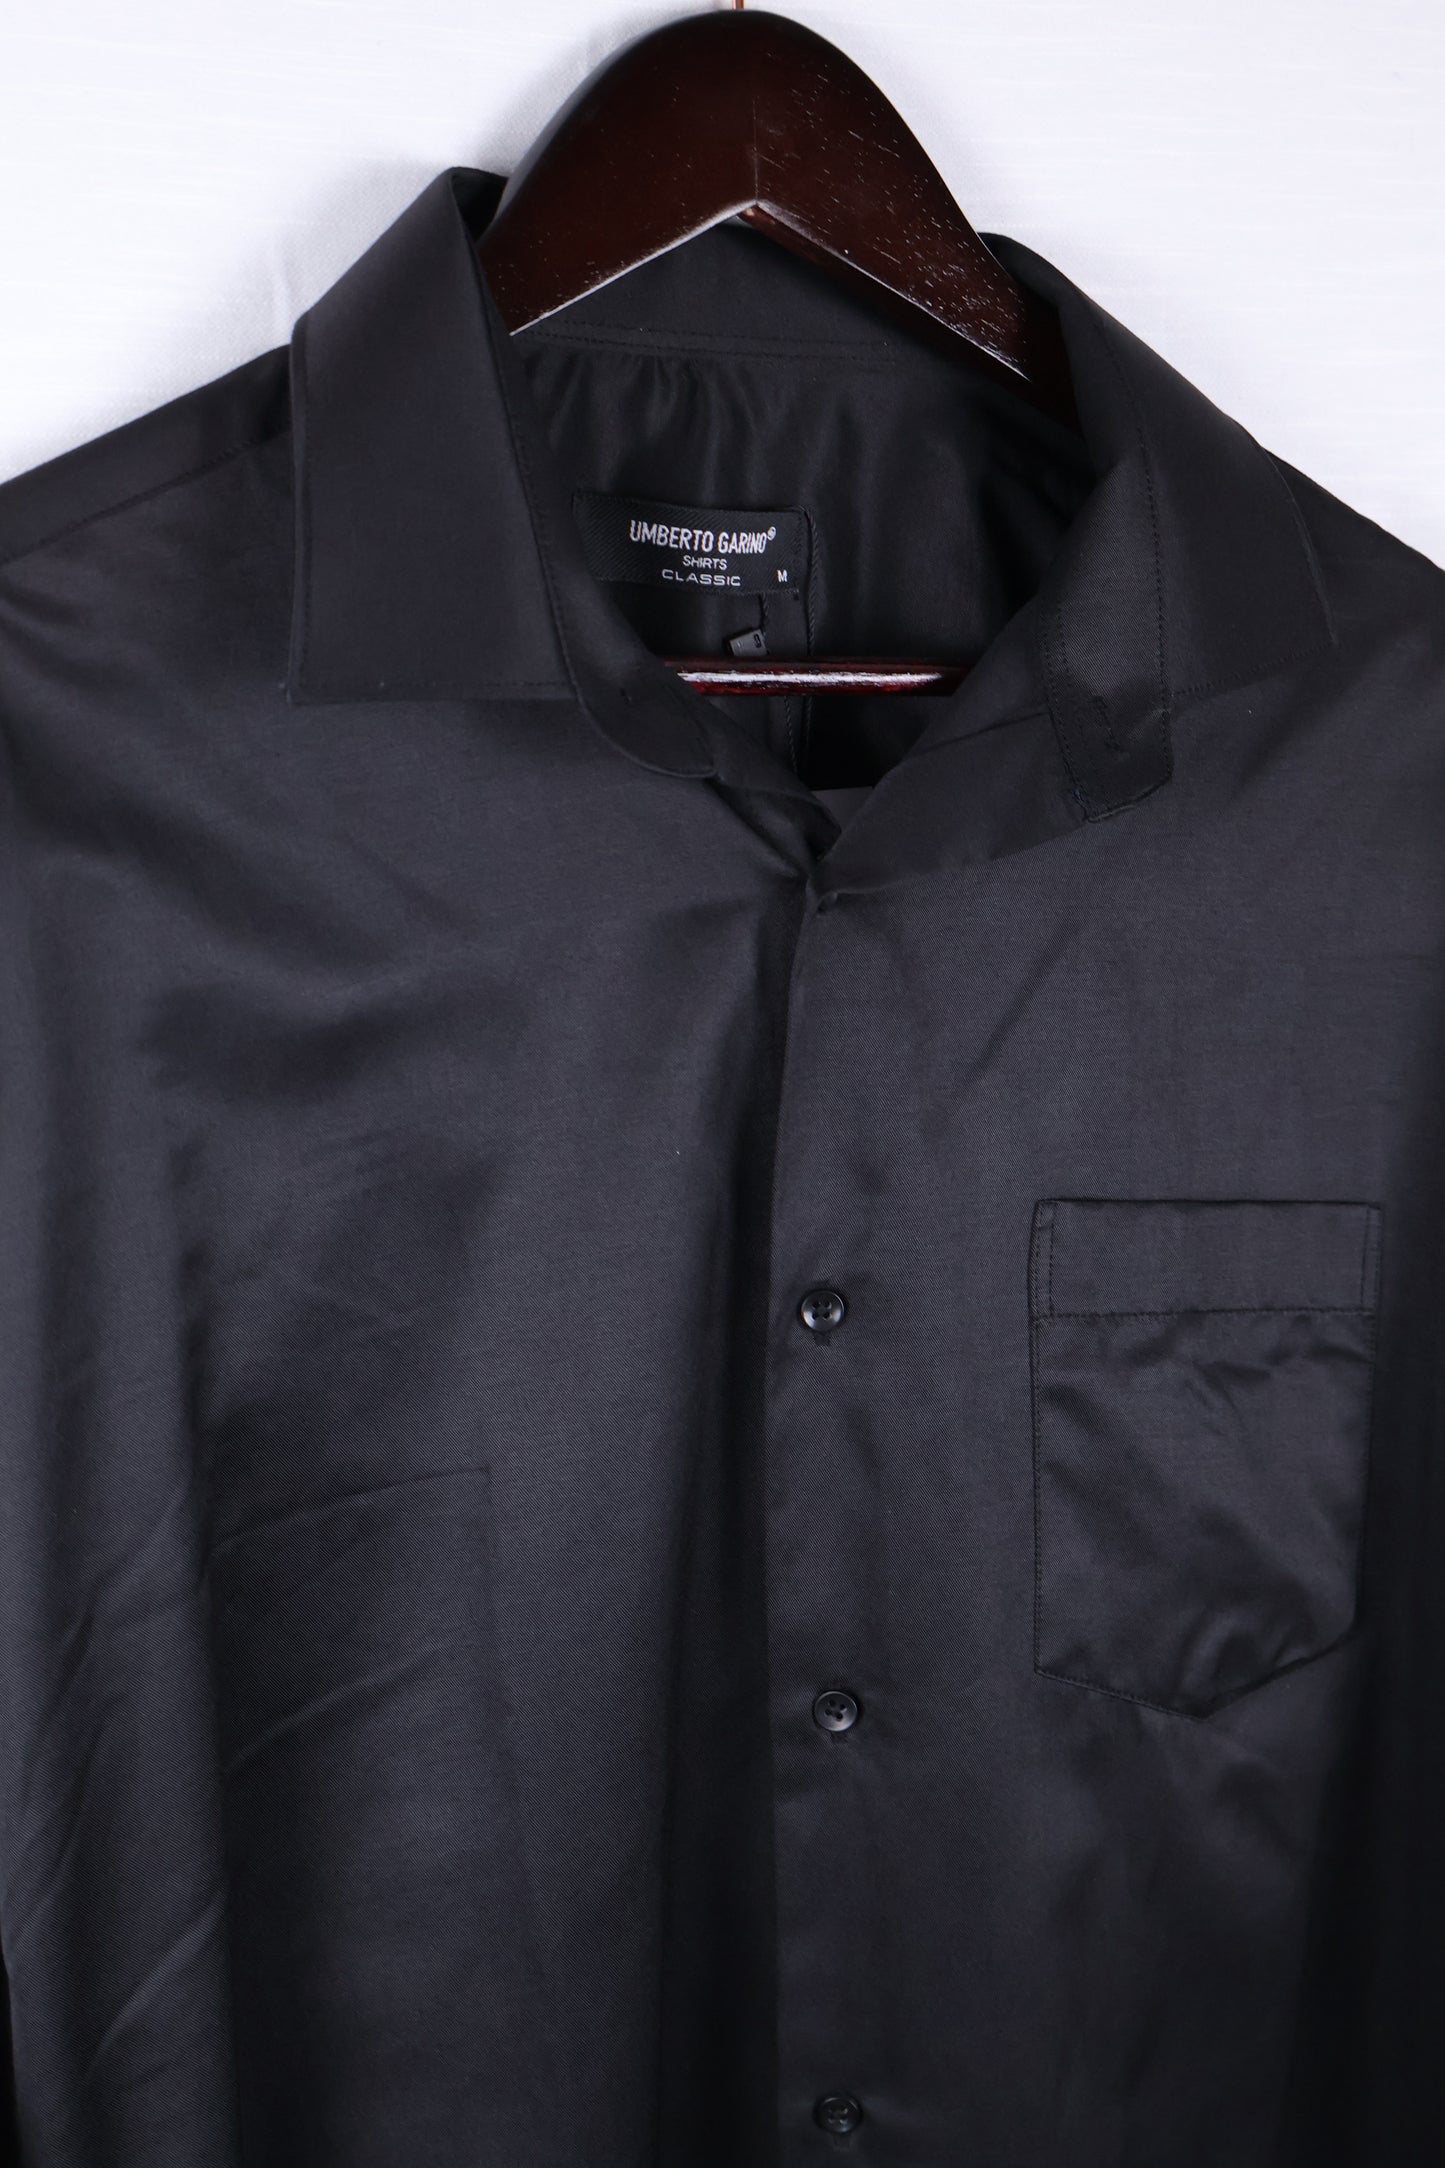 Shiny Black Button Up Dress Shirt